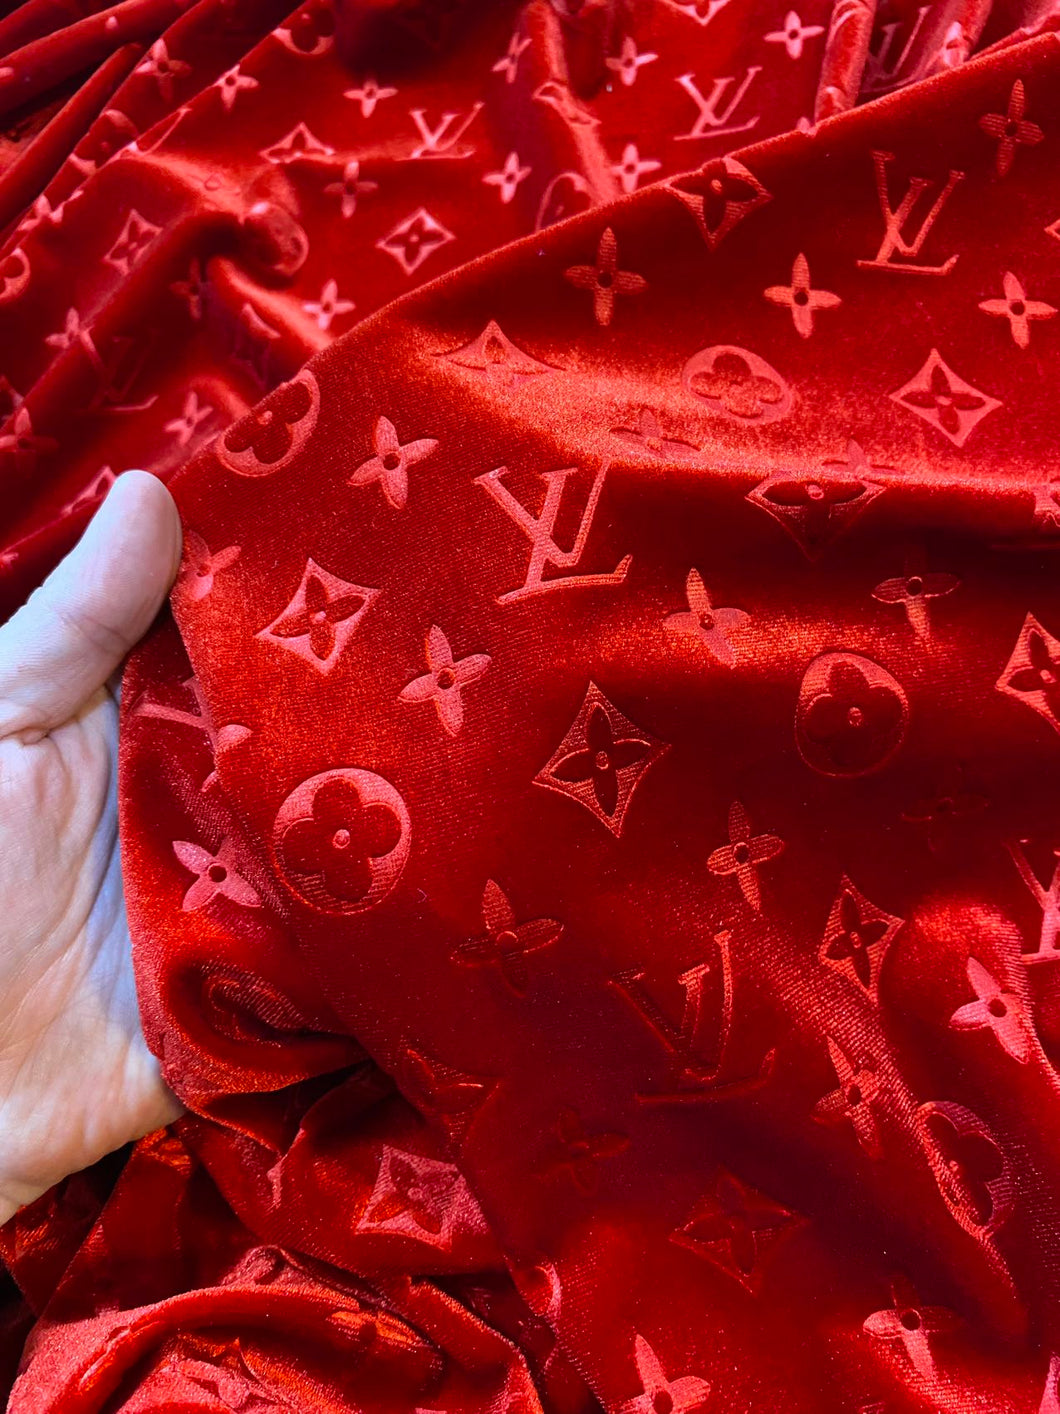 Red Louis Vuitton LV Velvet Fabric